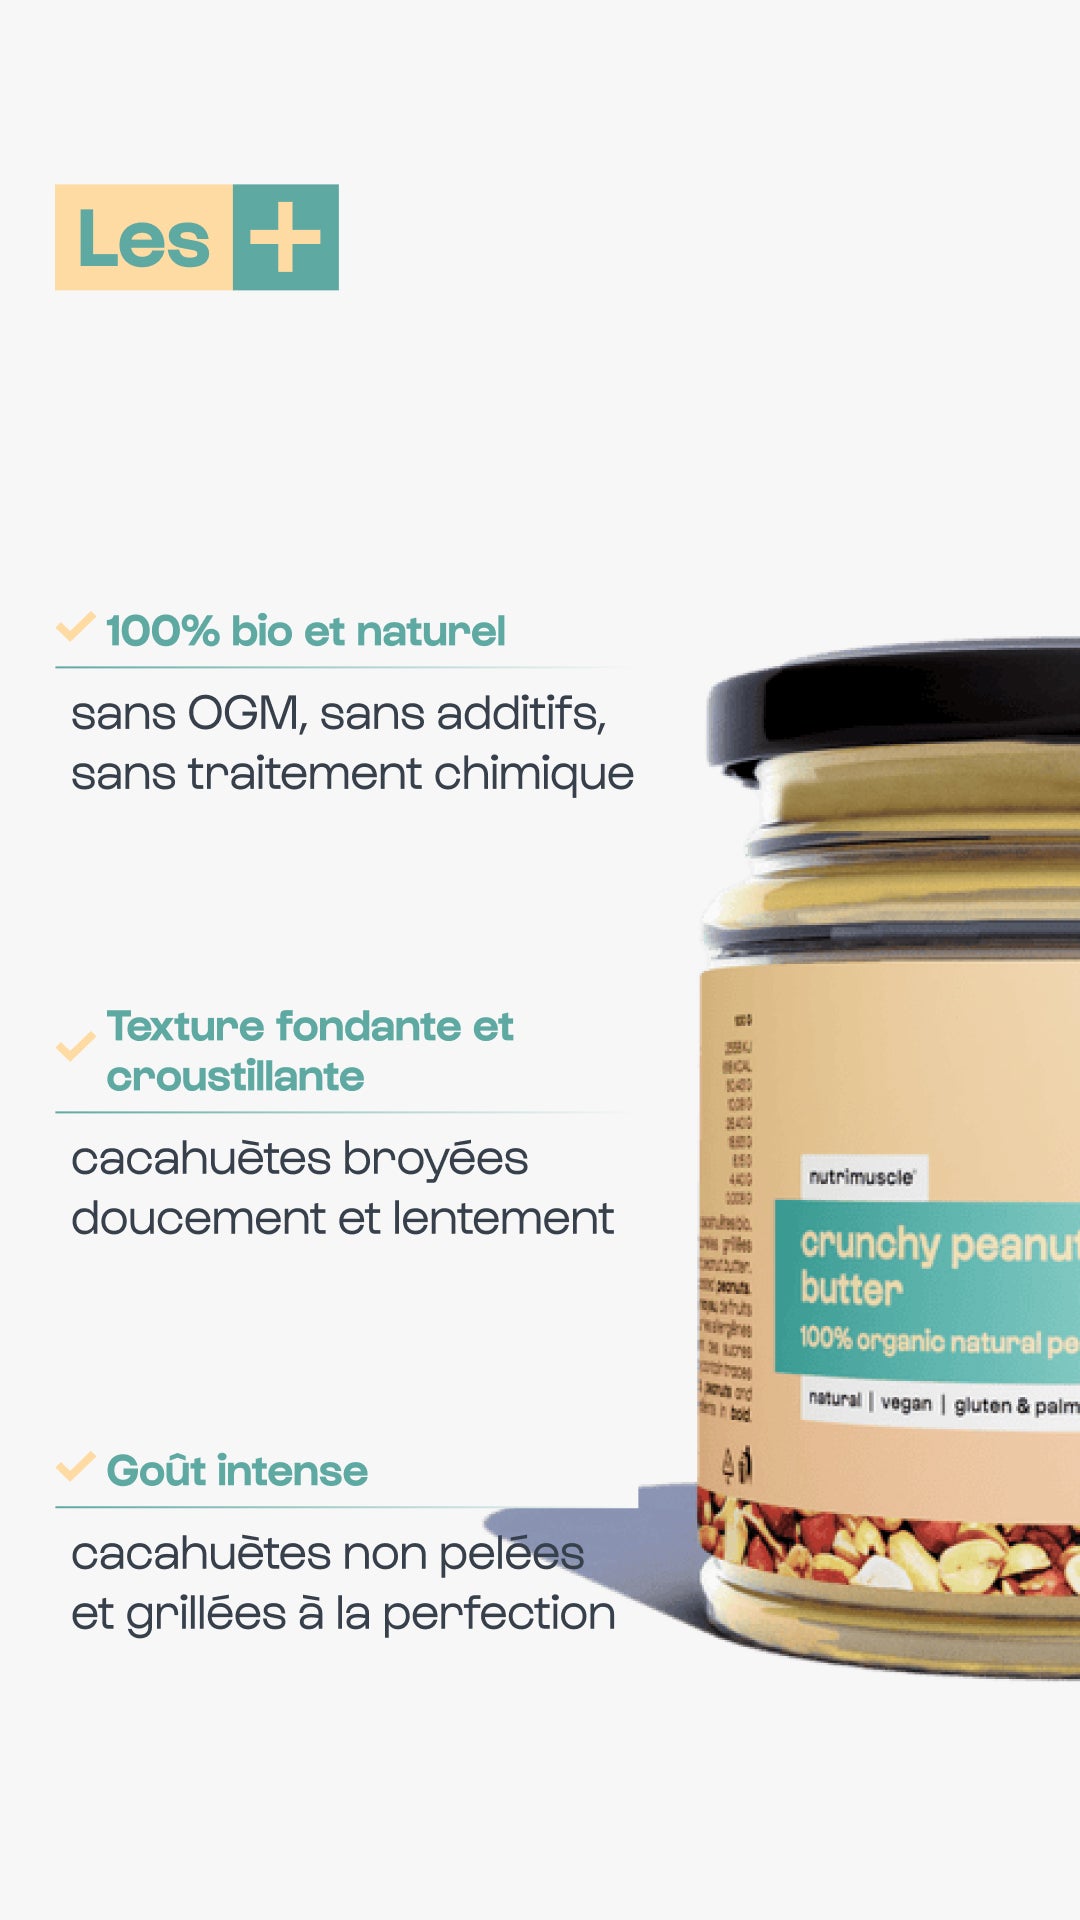 Complete organic peanut butter